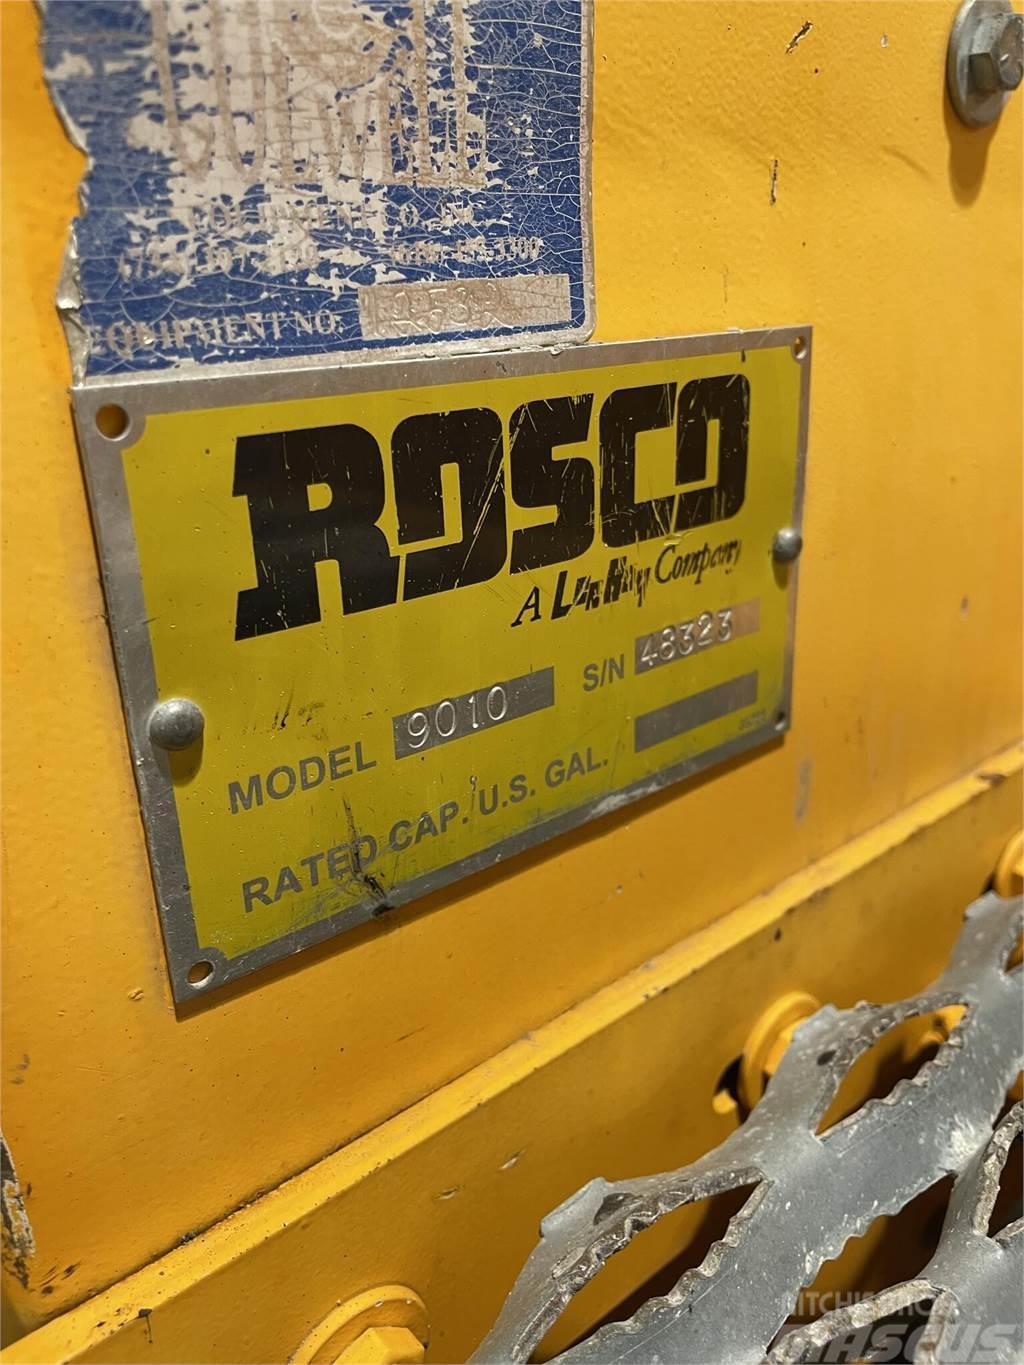 Rosco 9010 MTV (Material transport vehicle)